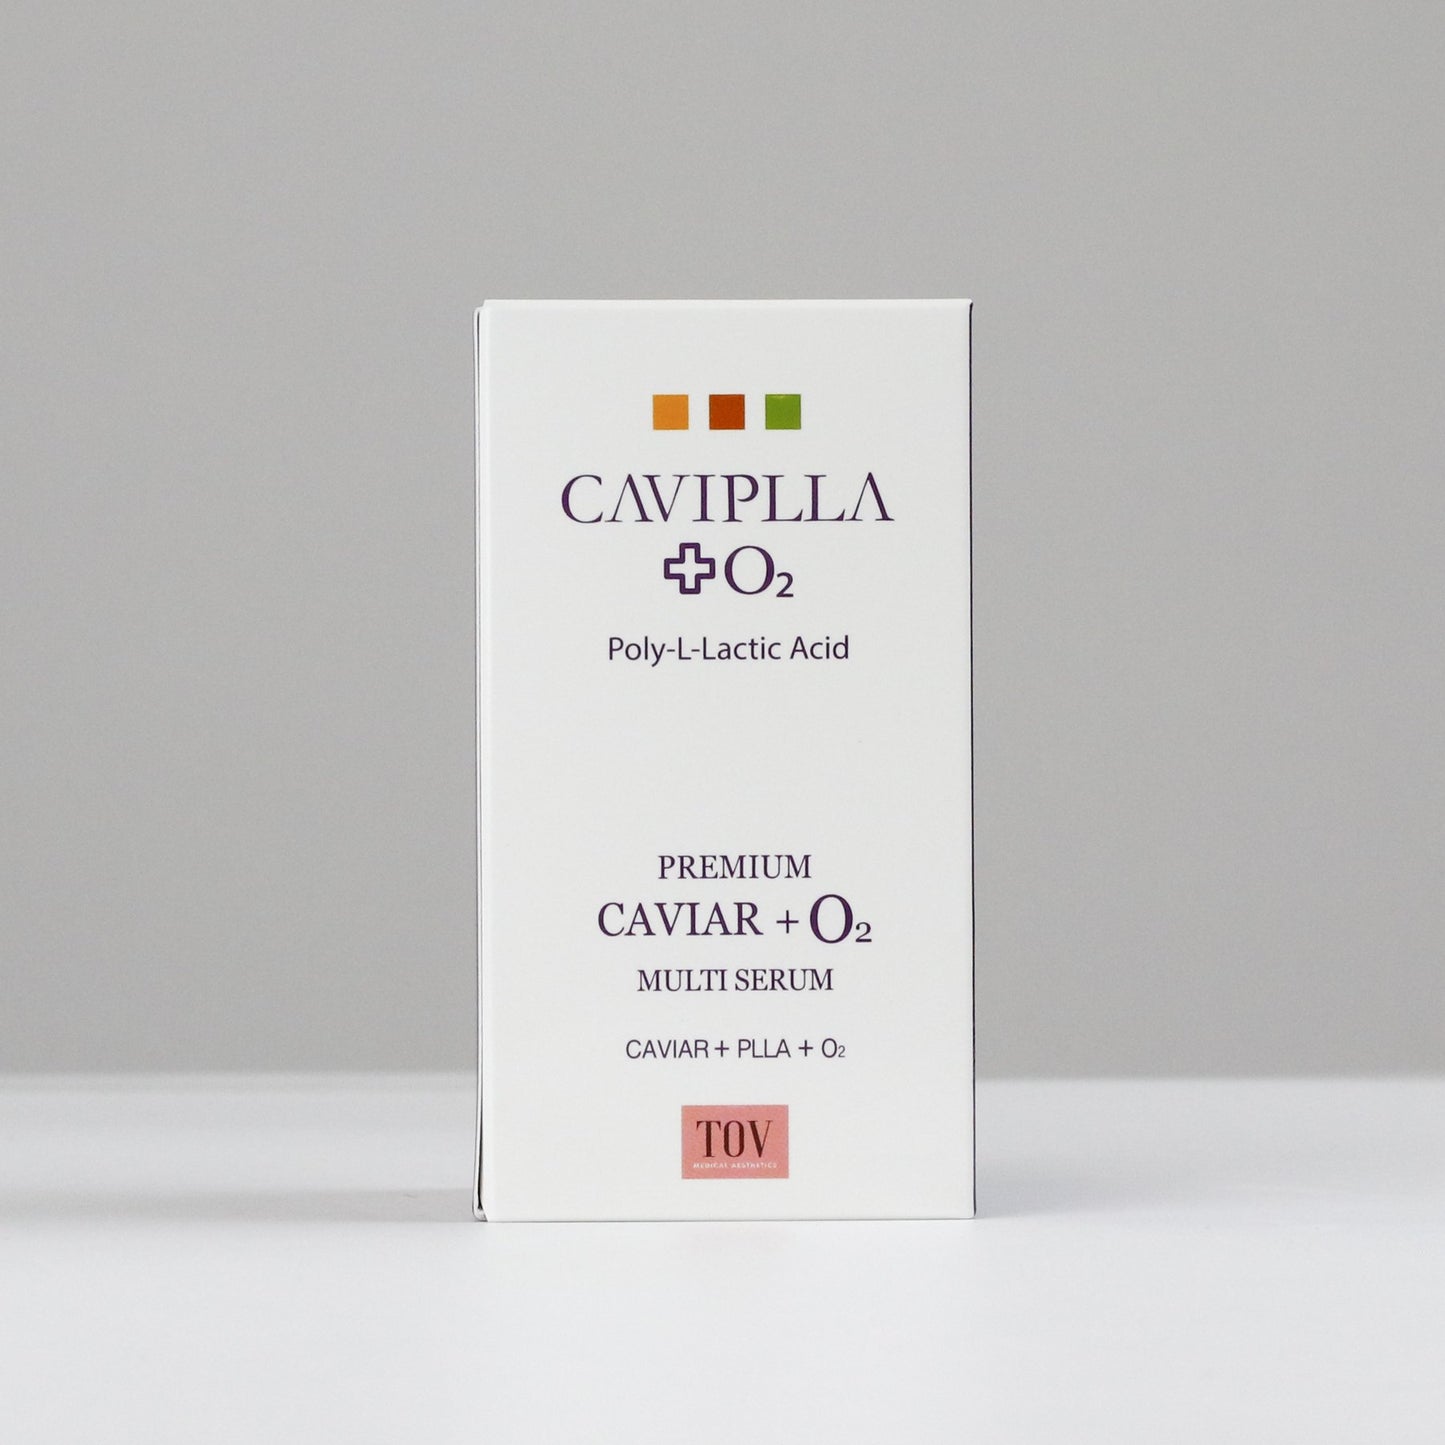 HOP+ Caviplla Poly-L Lactic Acid Premium Caviar + O2 Multi-Serum (House of PLLA, formerly Sculplla)